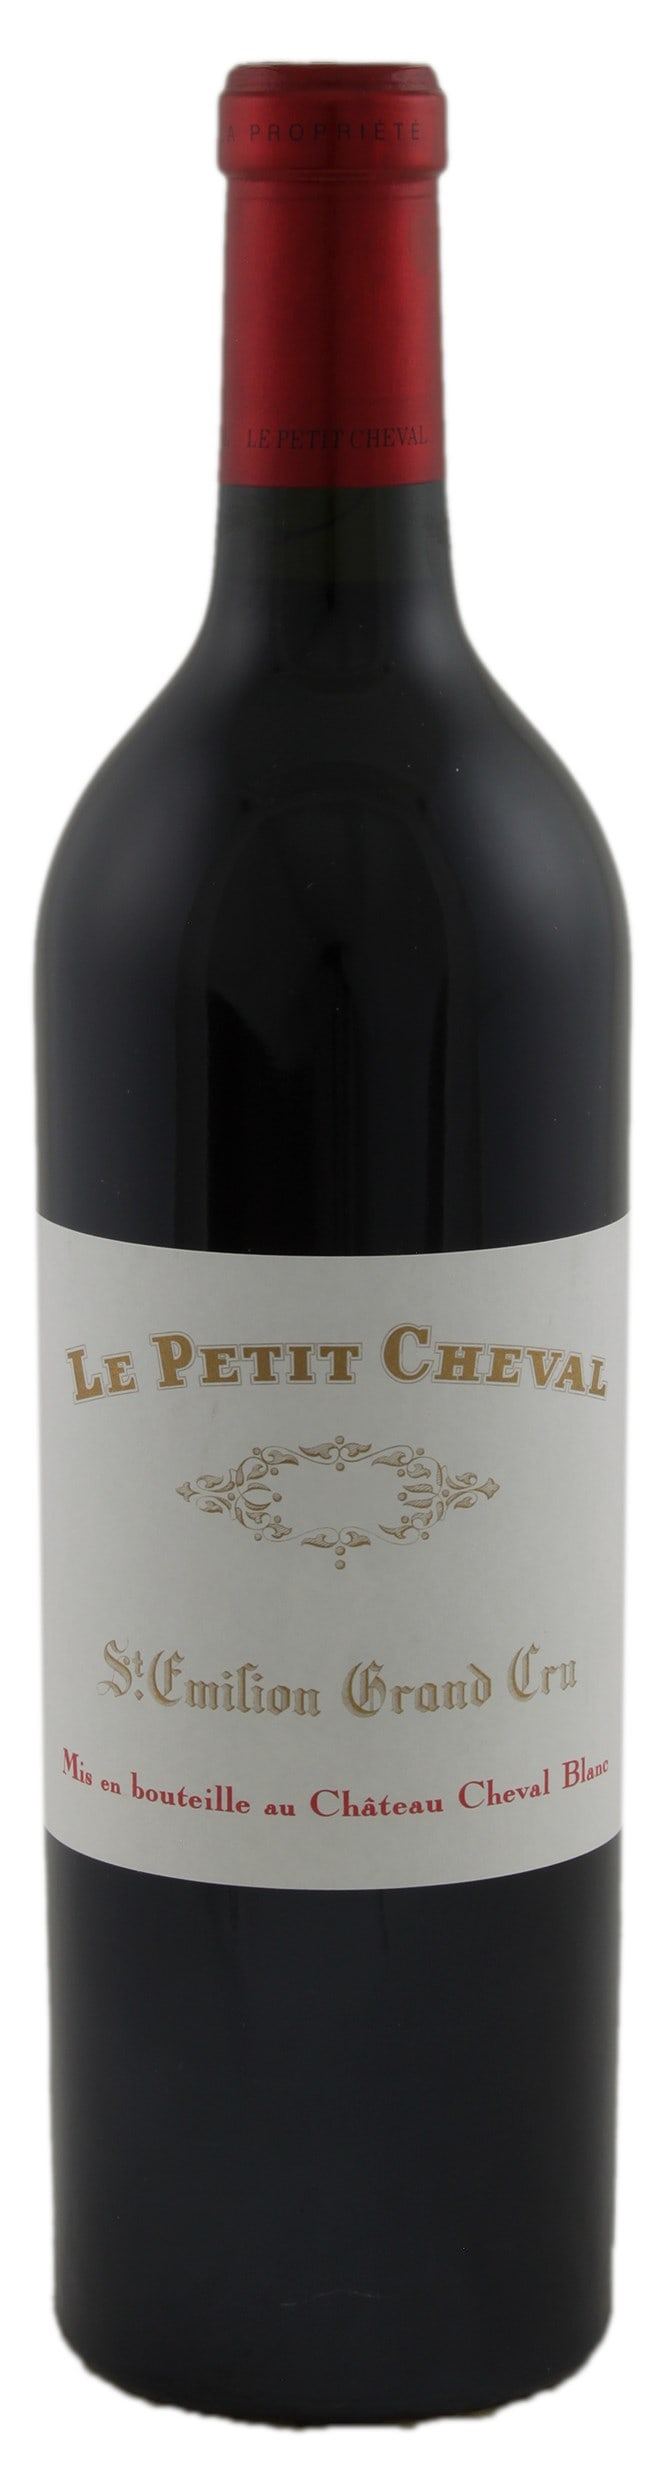 Chateau Cheval Blanc - Le Petit Cheval 2018 (750)